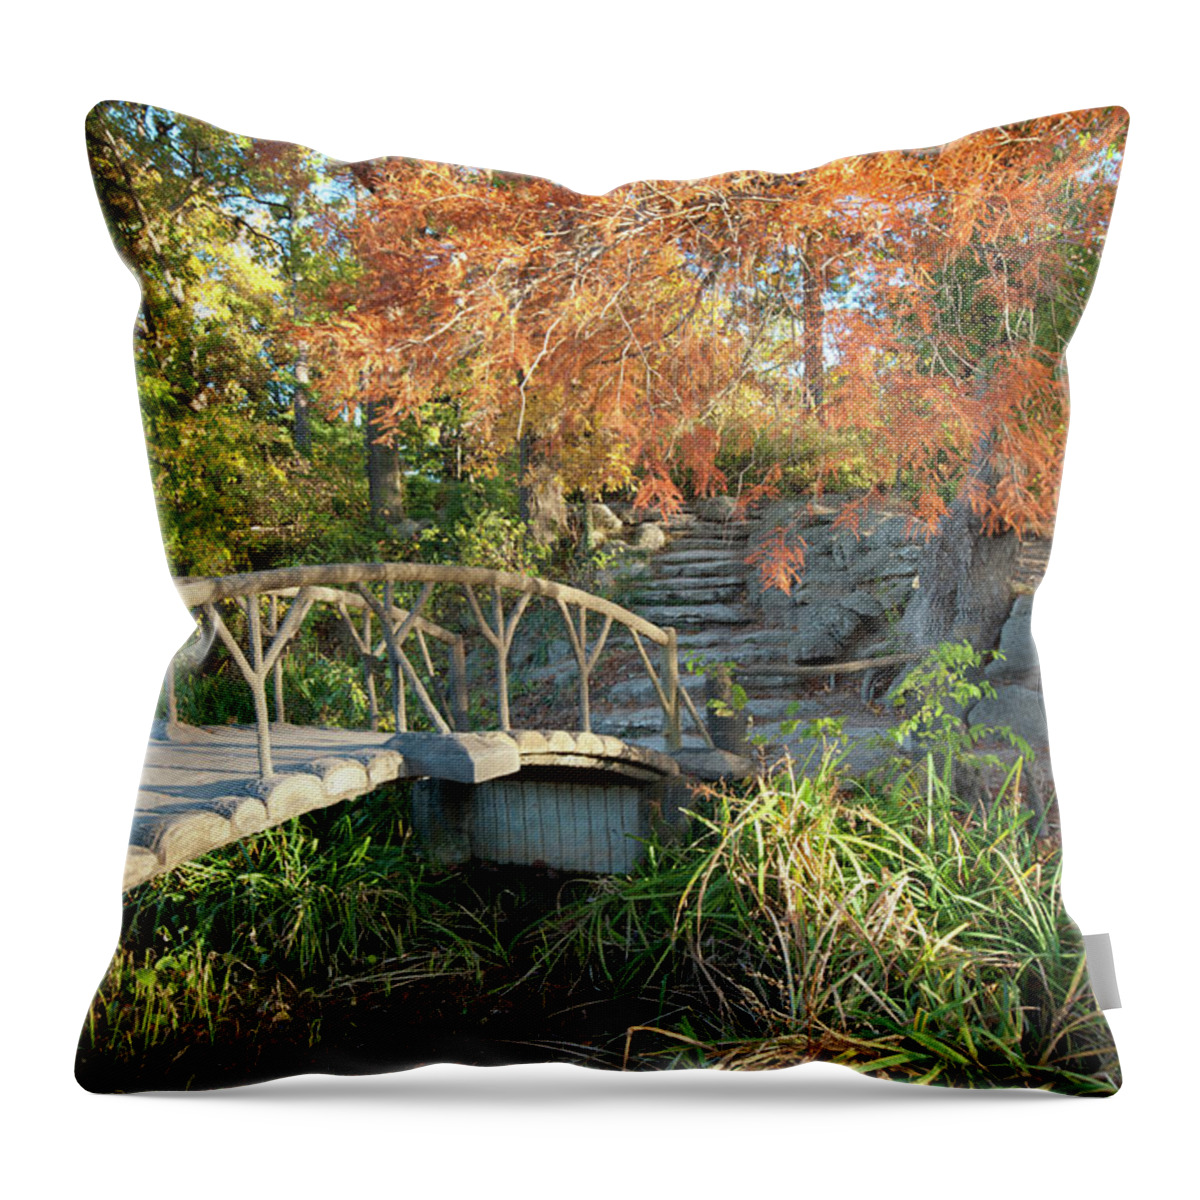 America Throw Pillow featuring the photograph Woodward Park Bridge in Autumn - Tulsa Oklahoma by Gregory Ballos